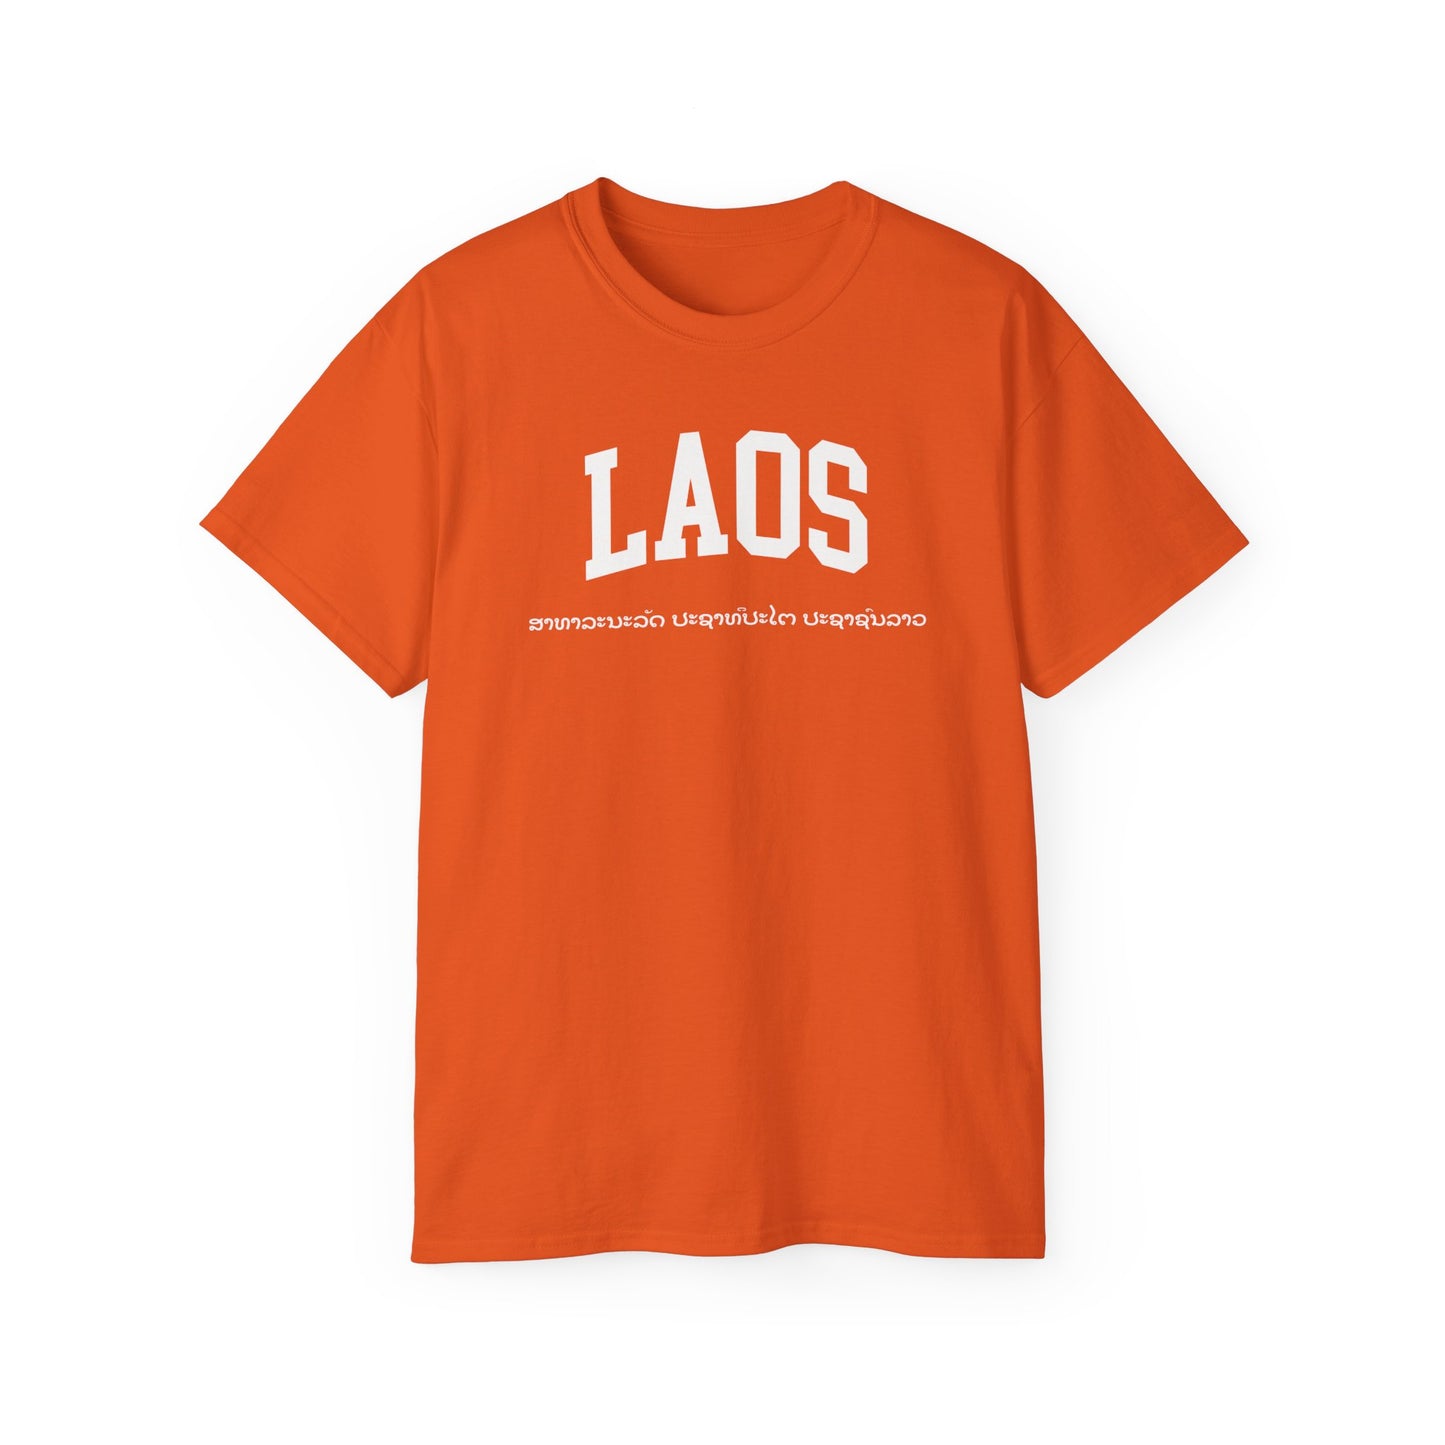 Laos Tee